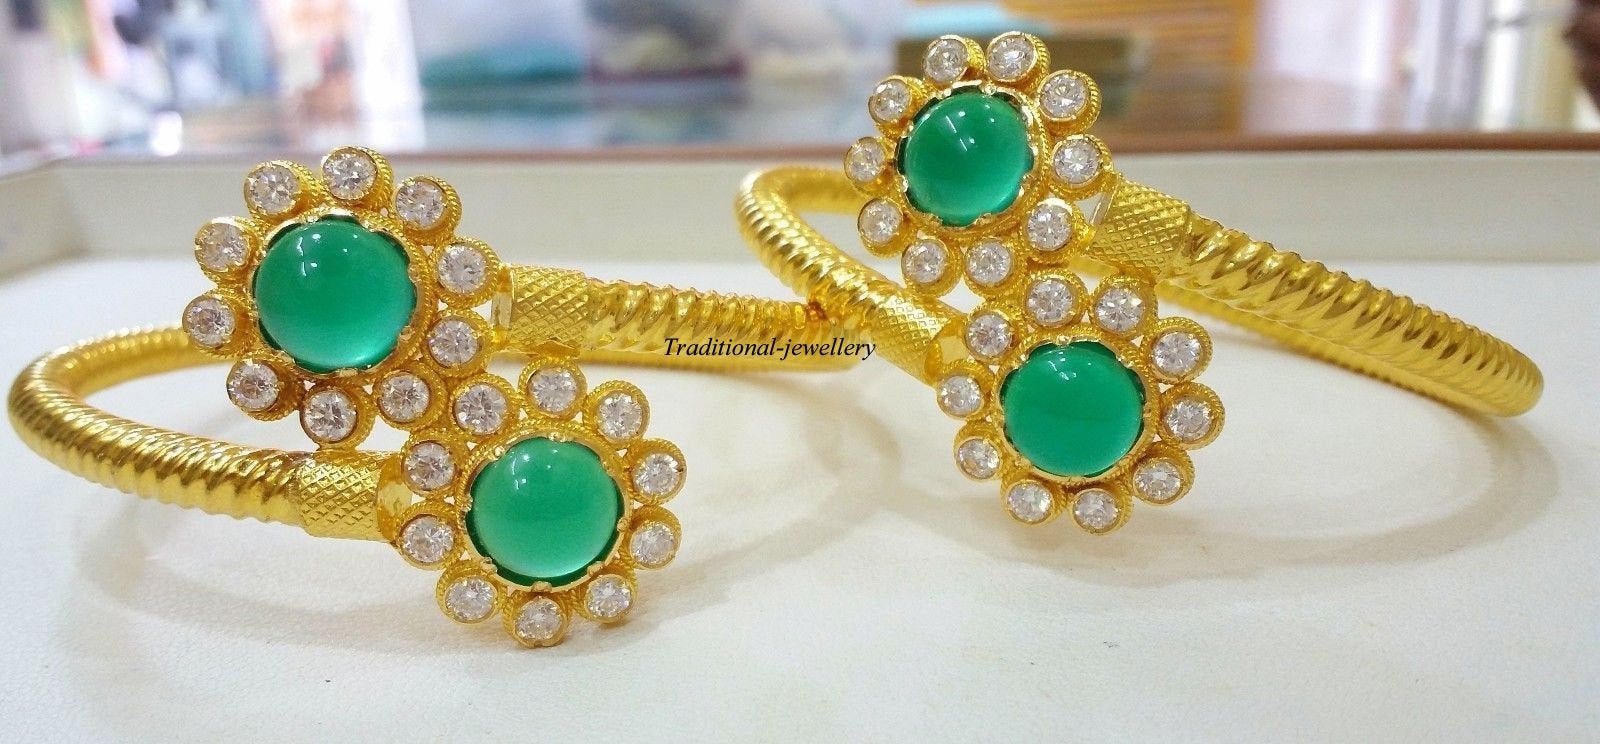 22k yellow gold handmade women's bangle bracelet kangan set with fabulous stone work traditional jewelry from Rajasthan India - TRIBAL ORNAMENTS